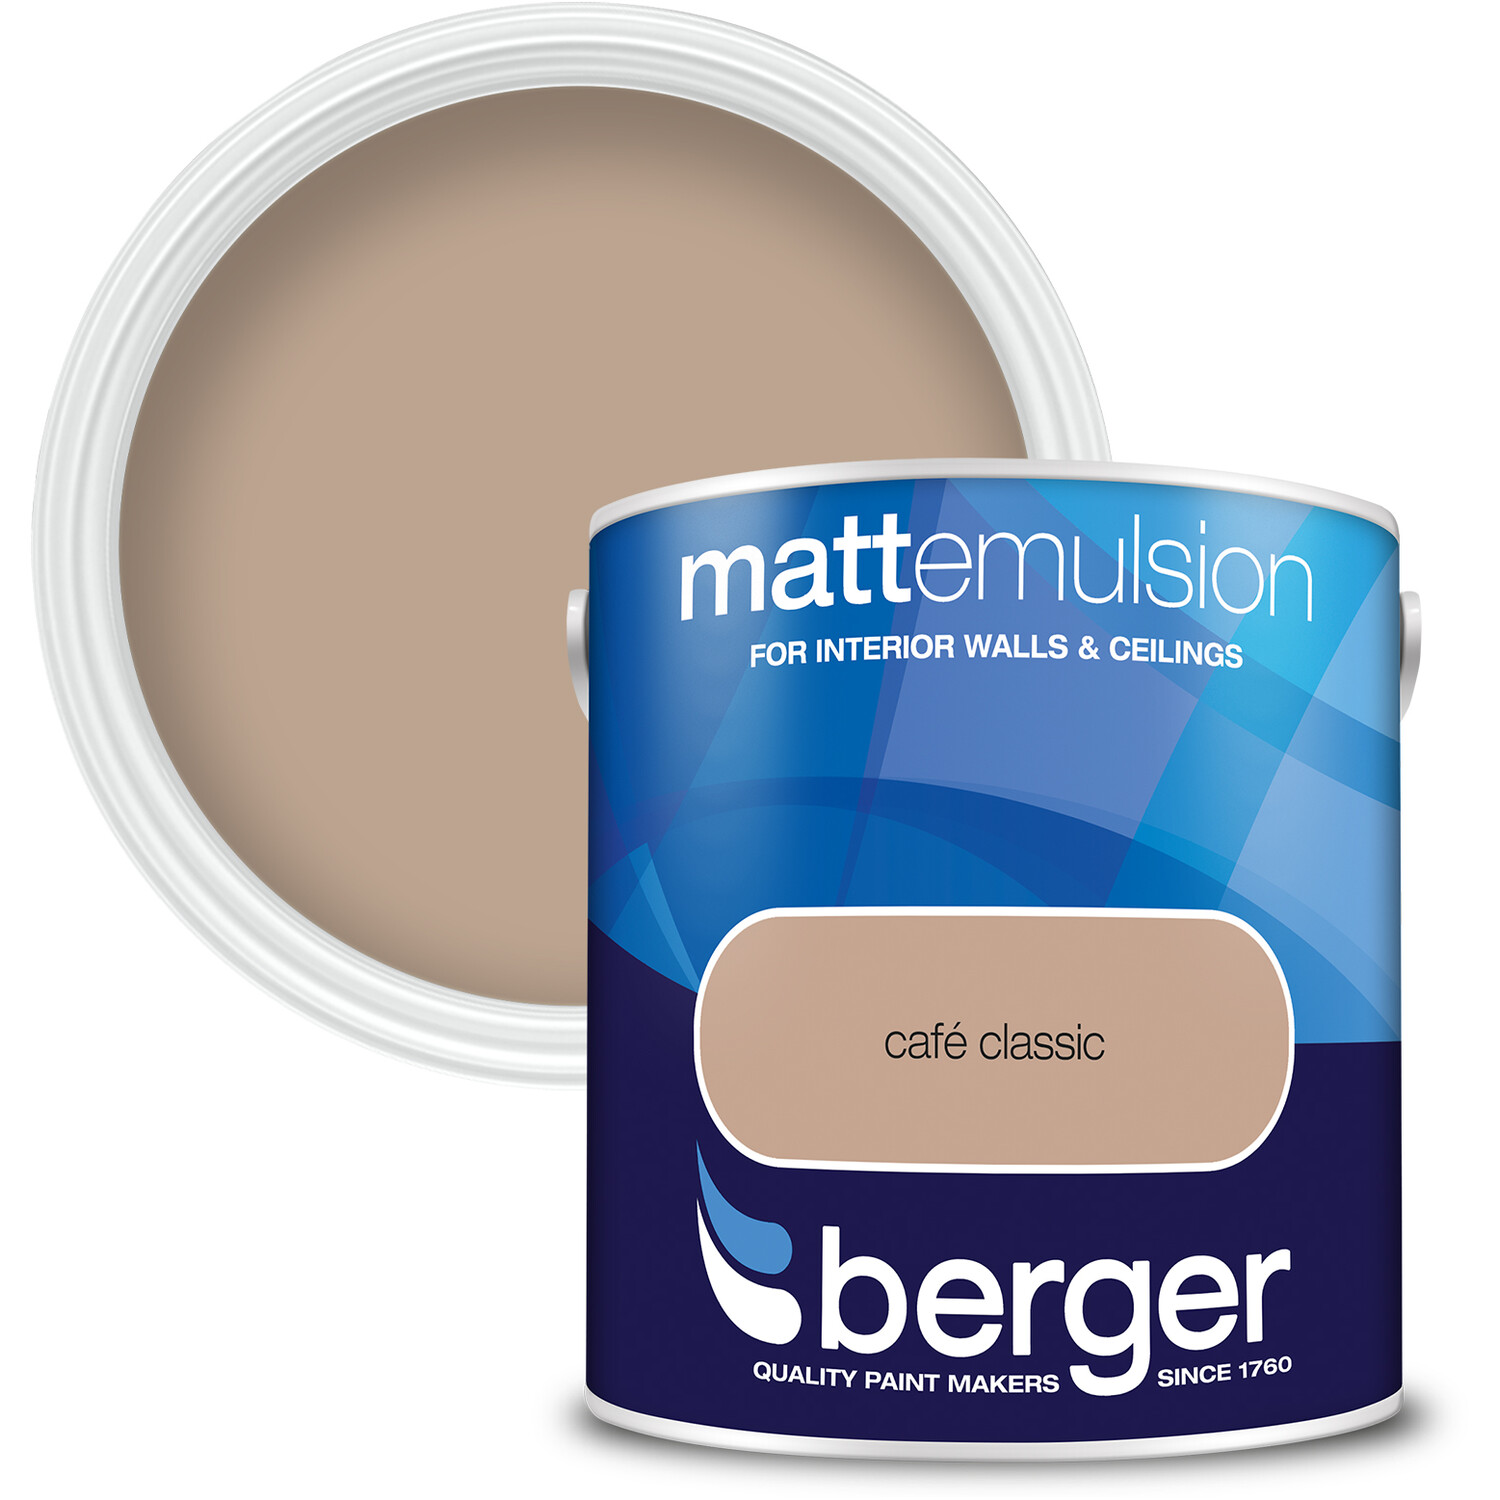 Berger Walls & Ceilings Cafe Classic Matt Emulsion Paint 2.5L Image 1